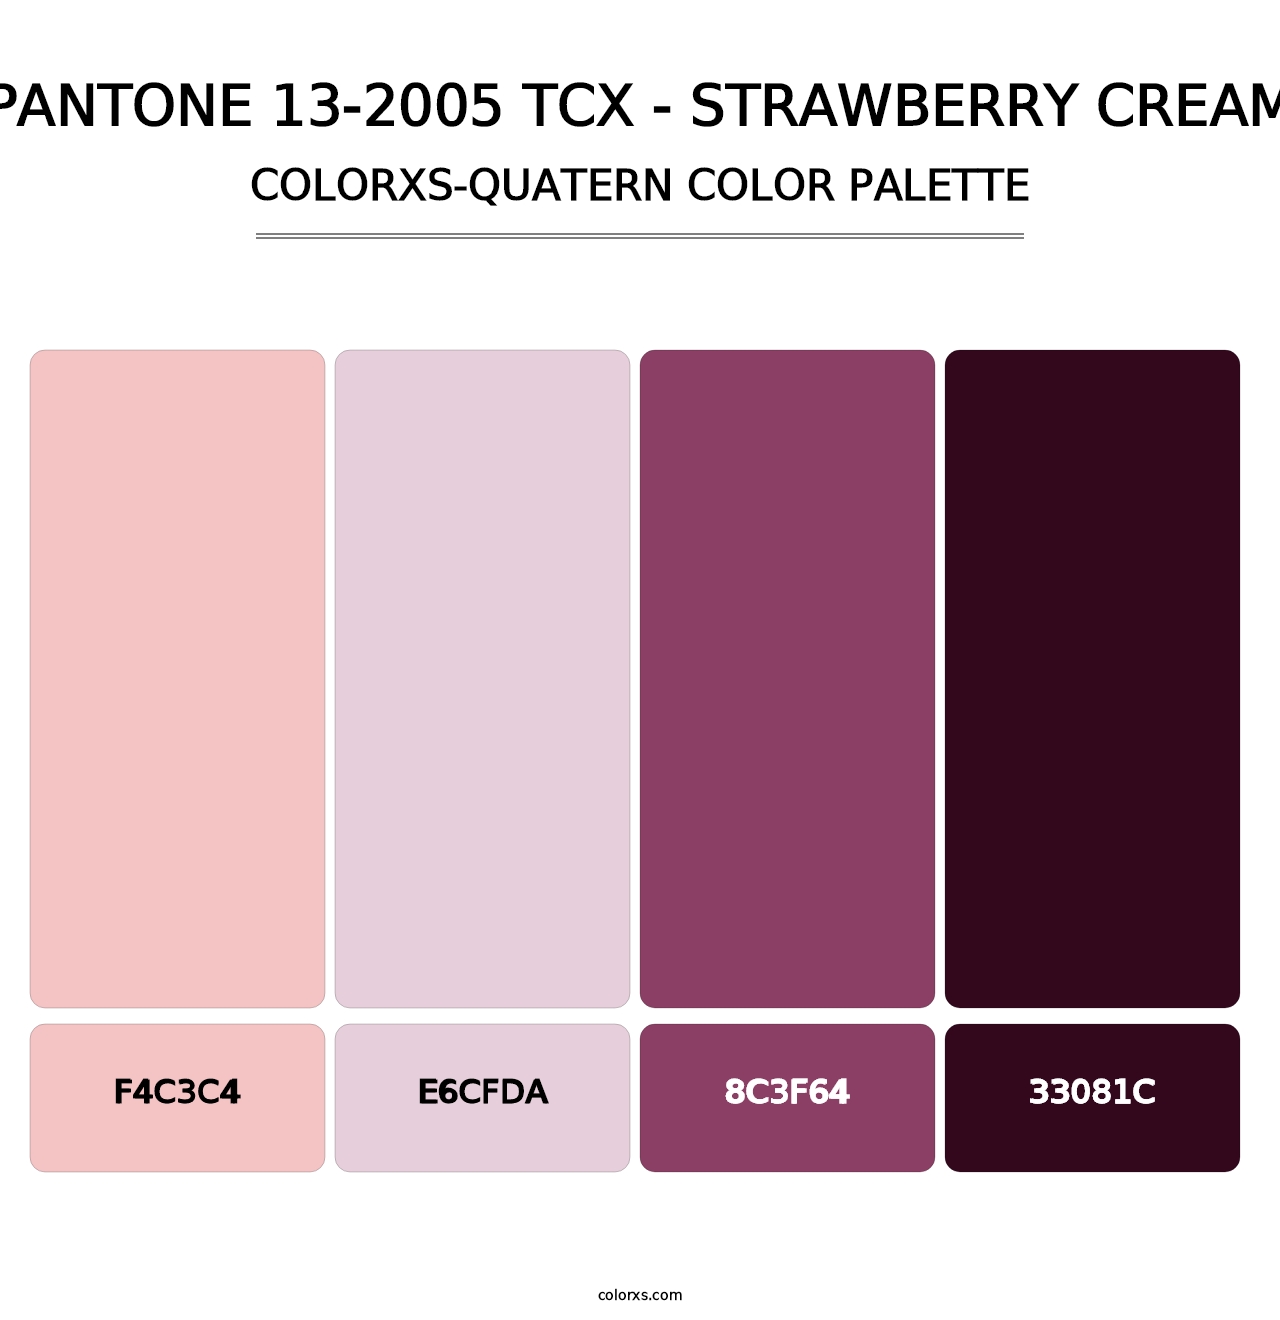 PANTONE 13-2005 TCX - Strawberry Cream - Colorxs Quatern Palette